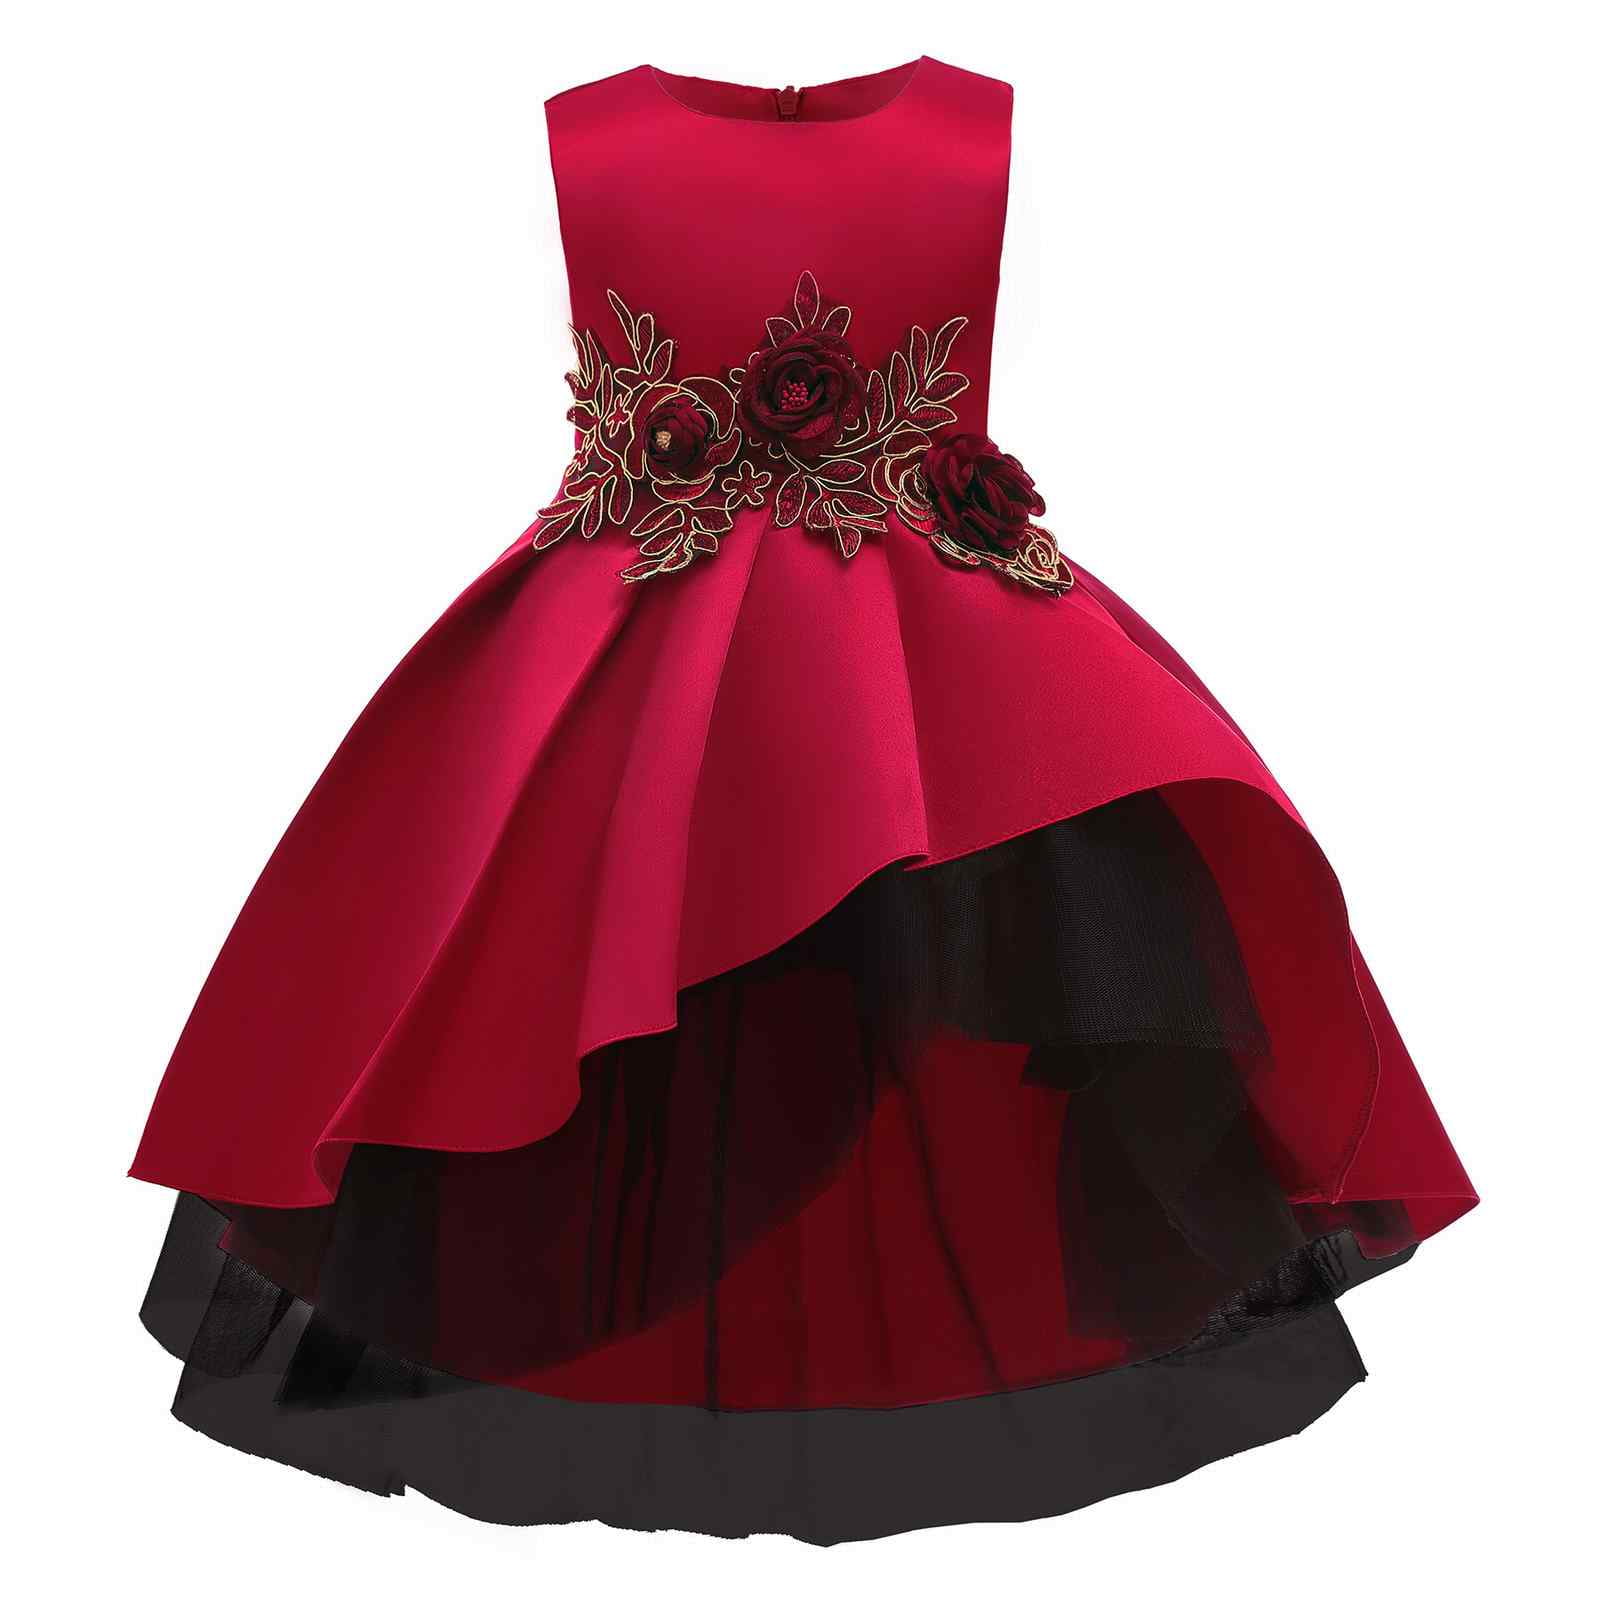 ZHAGHMIN Western Dress Girls Red New Children S Clothing Girl Flower Princess Piano Performance Women Summer Dresses School Clothes G 597f1379 8f16 4e3b 9742 6431f4638216.6d76059f8a9b77bfbe06de0eab4e501a